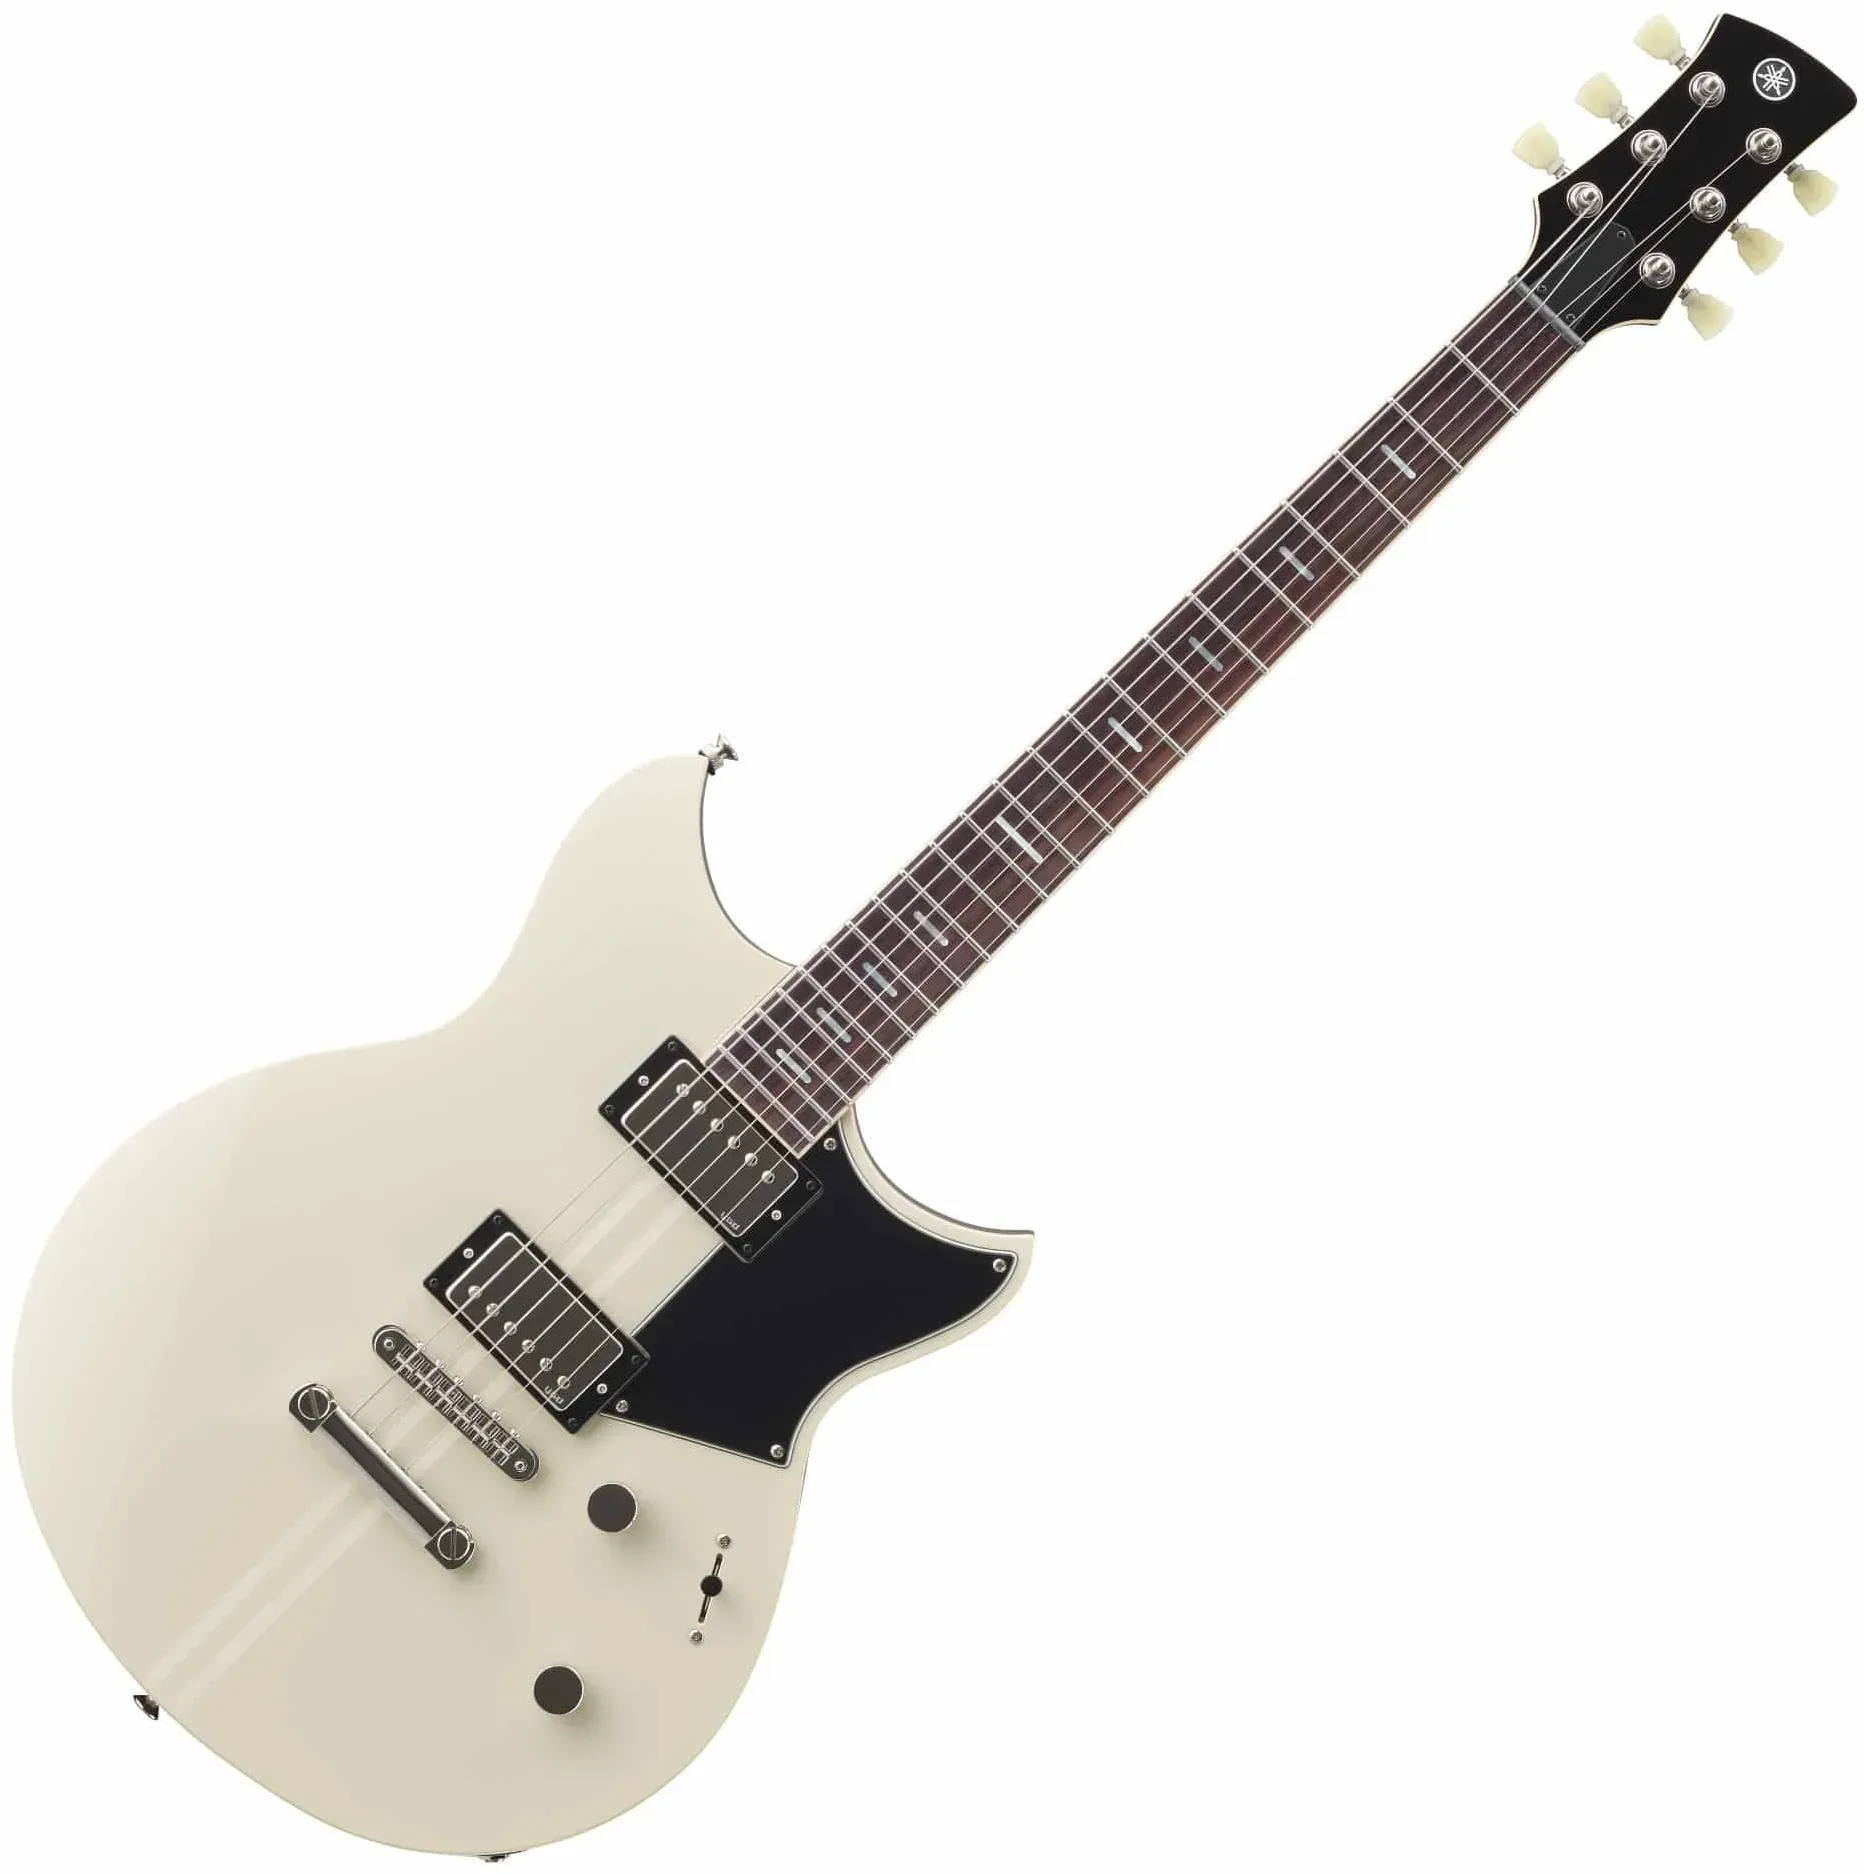 Yamaha RSS20 VW Revstar Standard E-Gitarre Vintage White